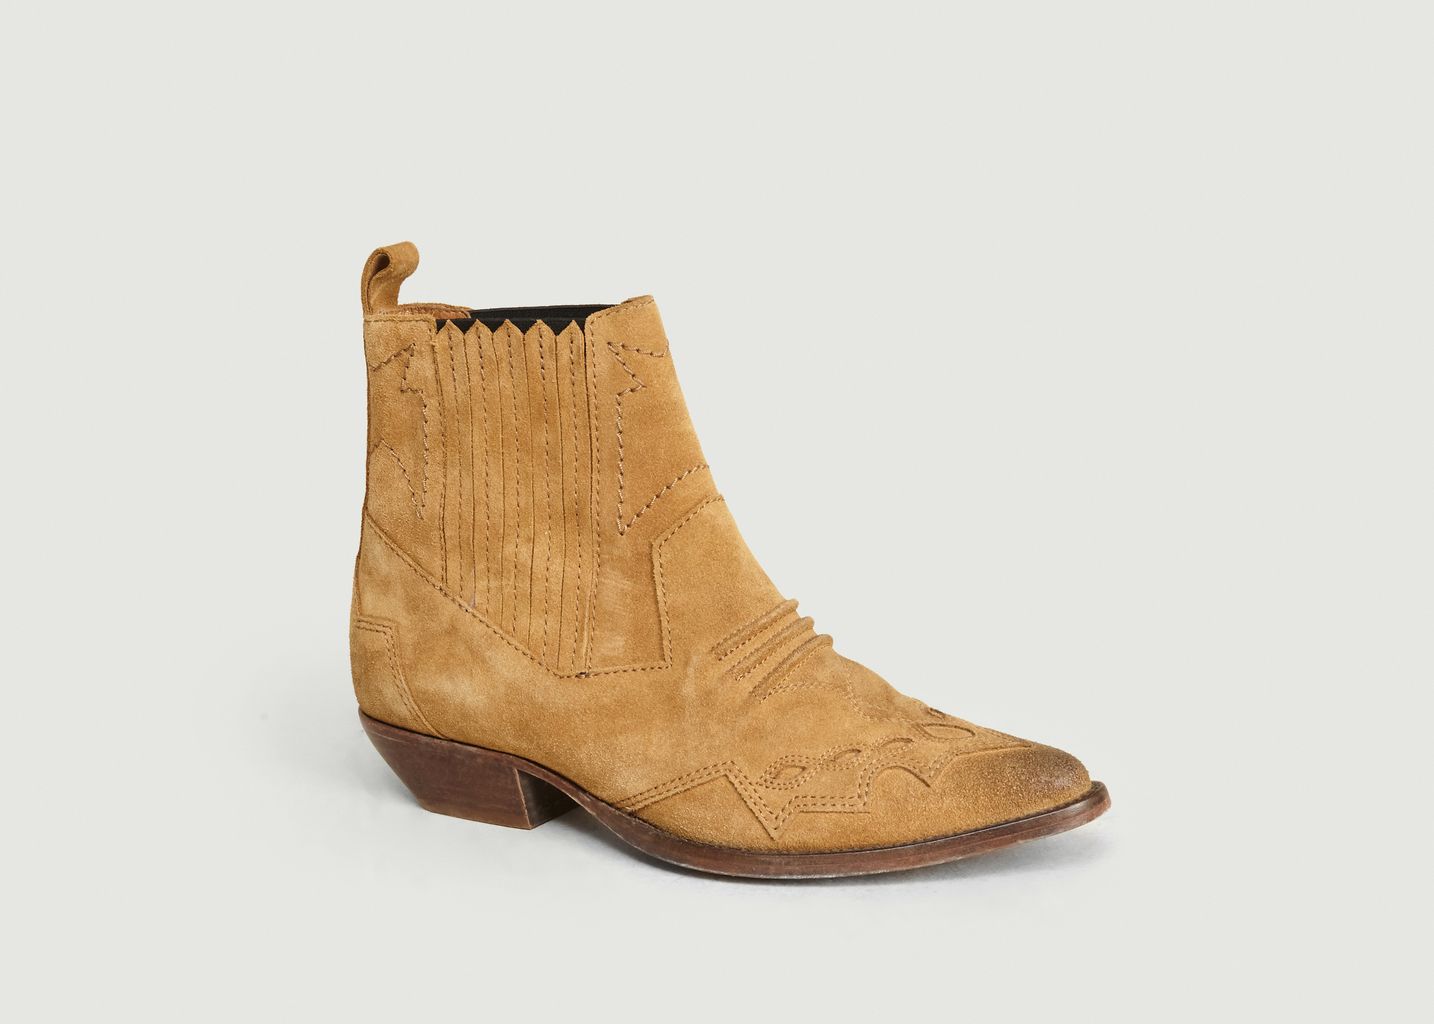 Tucson Cowboy Boots - Roseanna